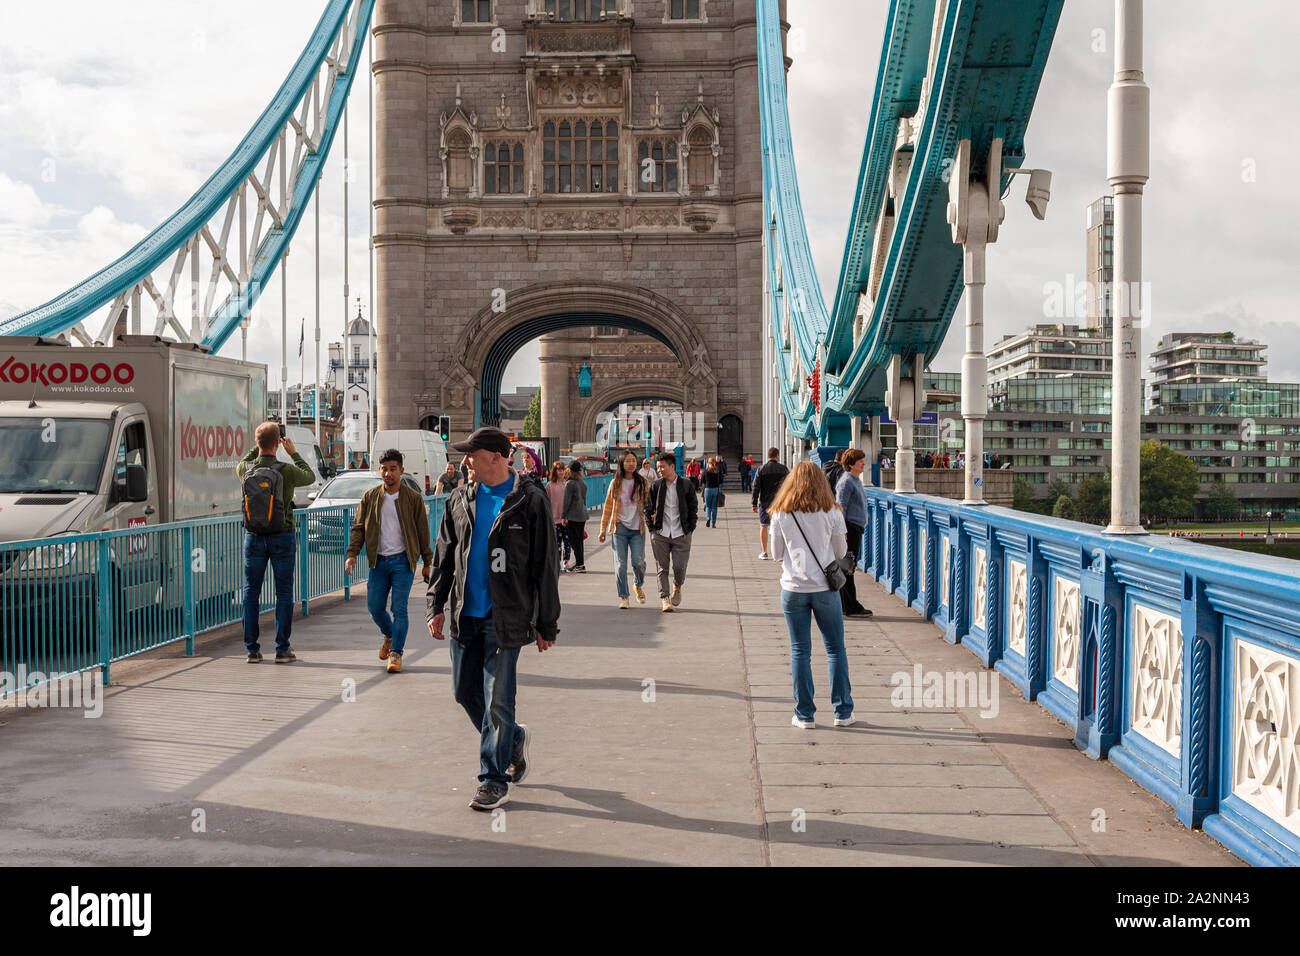 Tower Bridge, London, UK Stock Photo